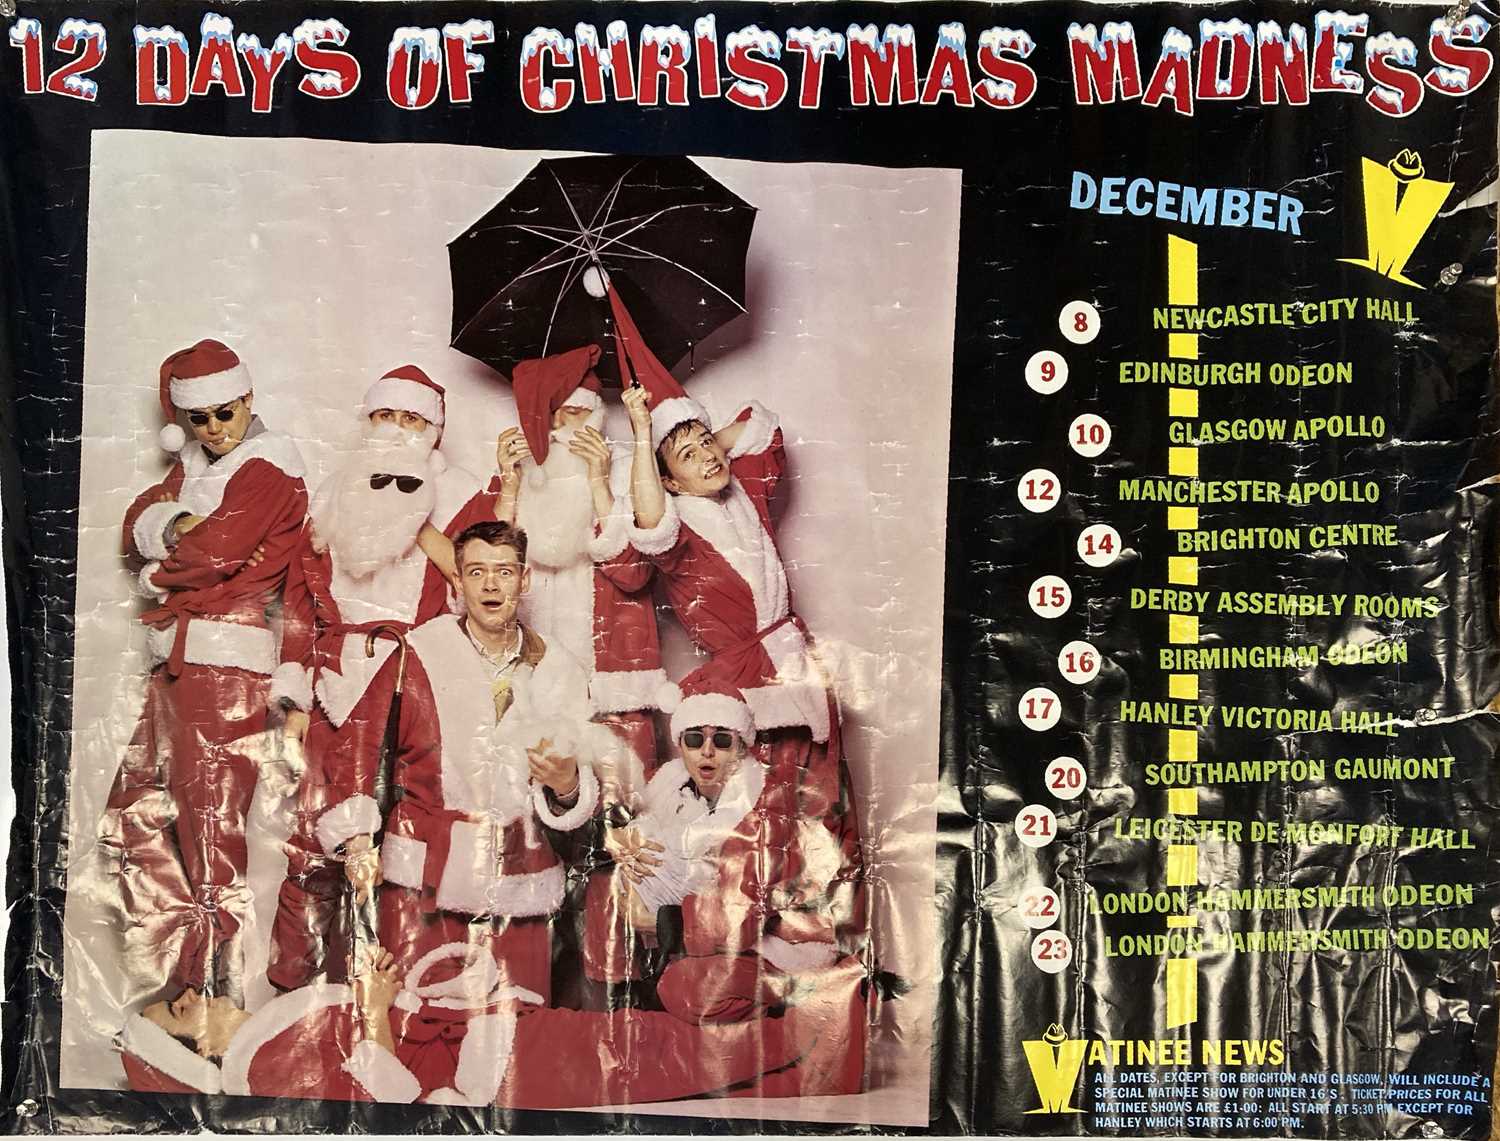 madness tour dates 1980